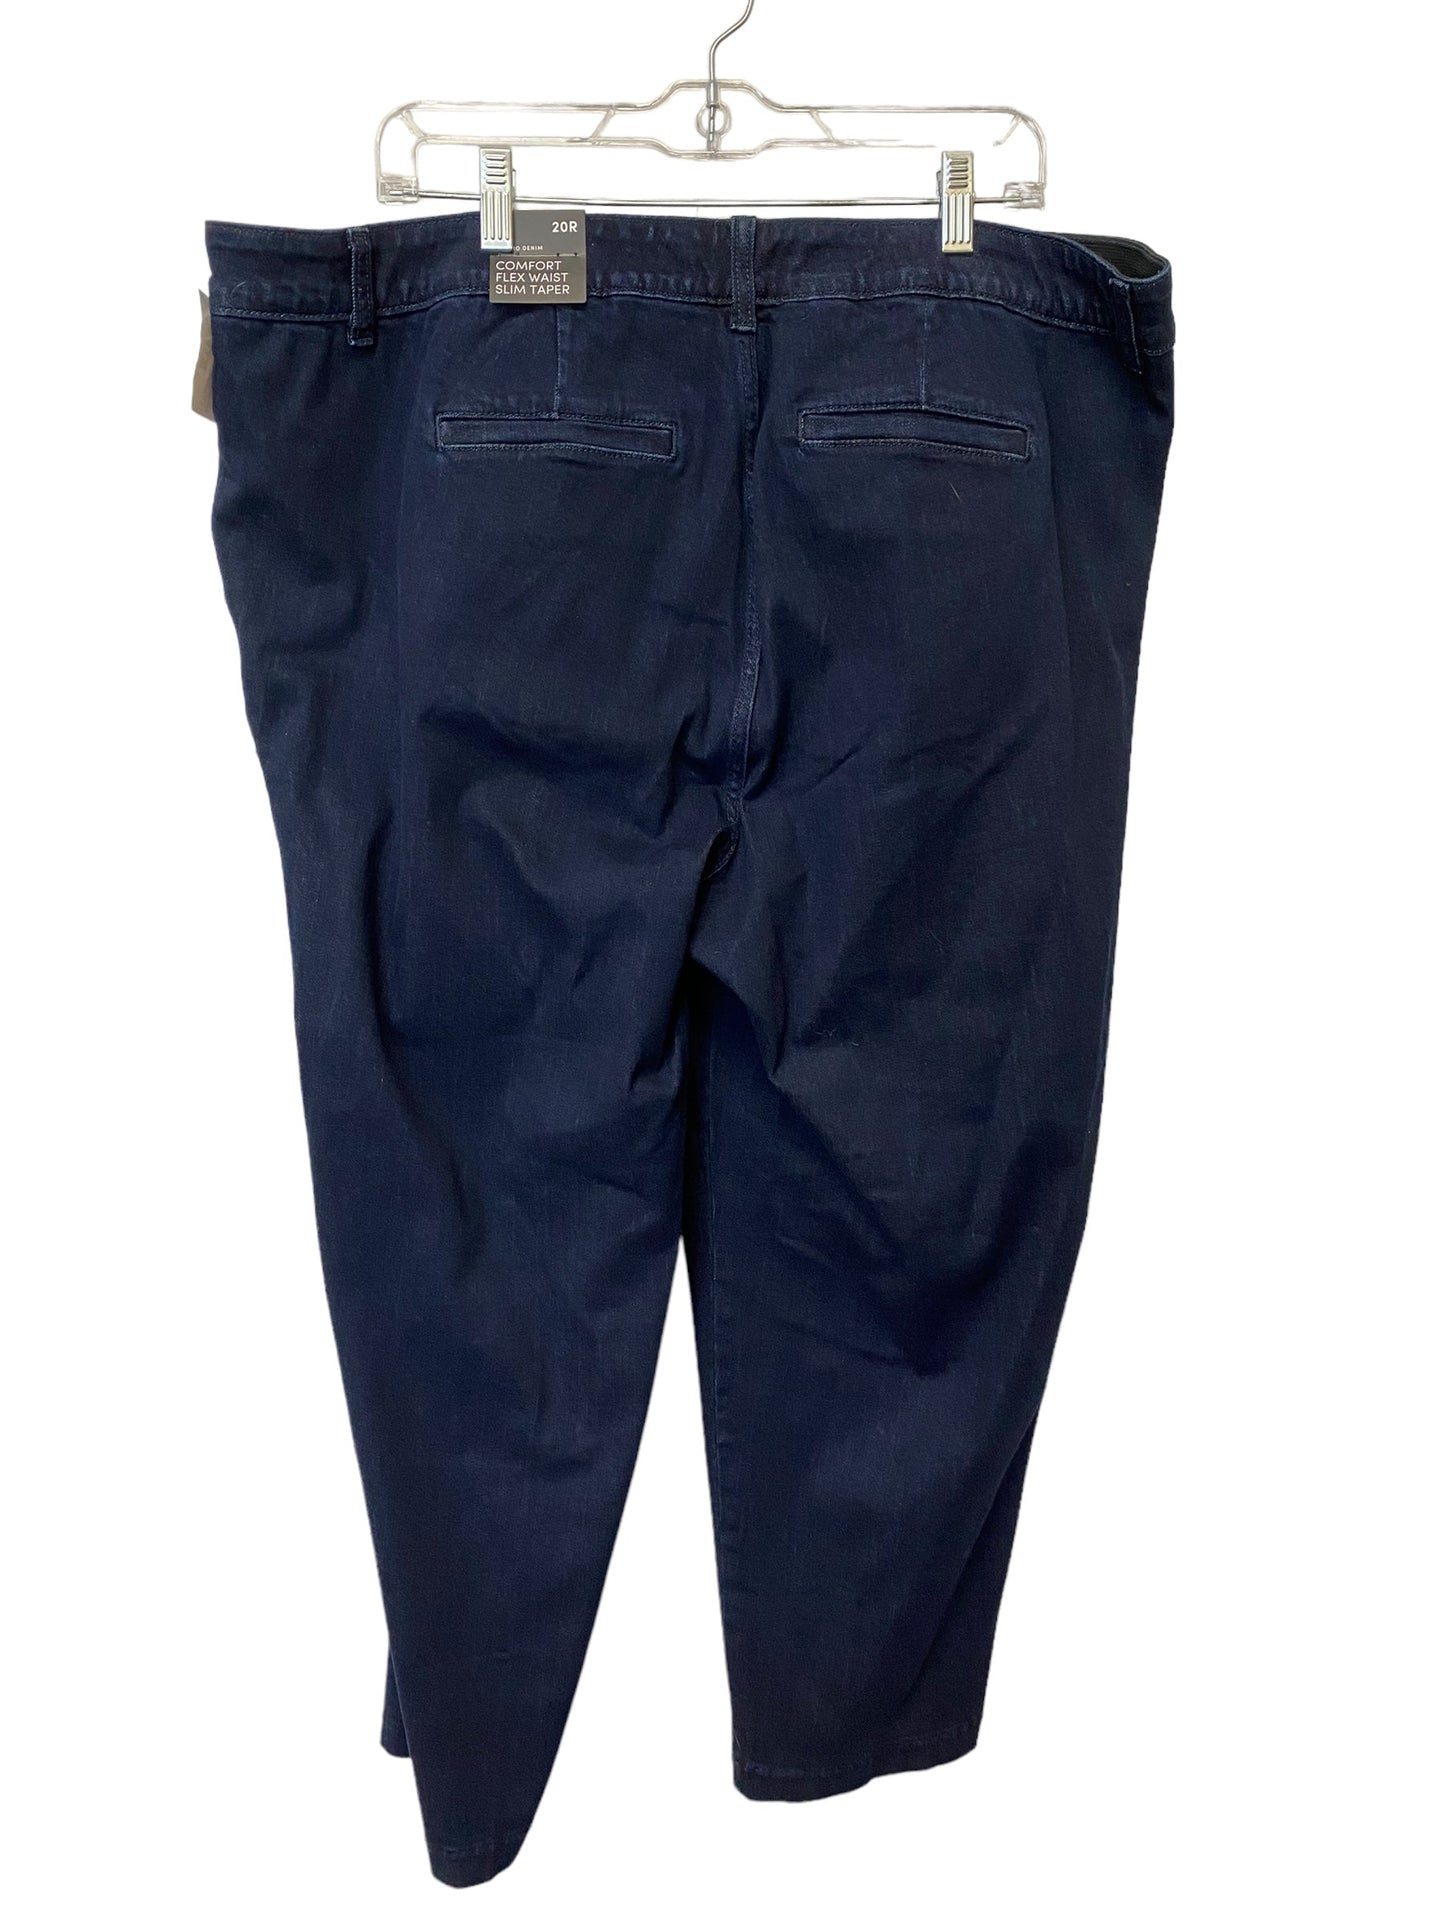 Jeans Skinny By Torrid  Size: 20